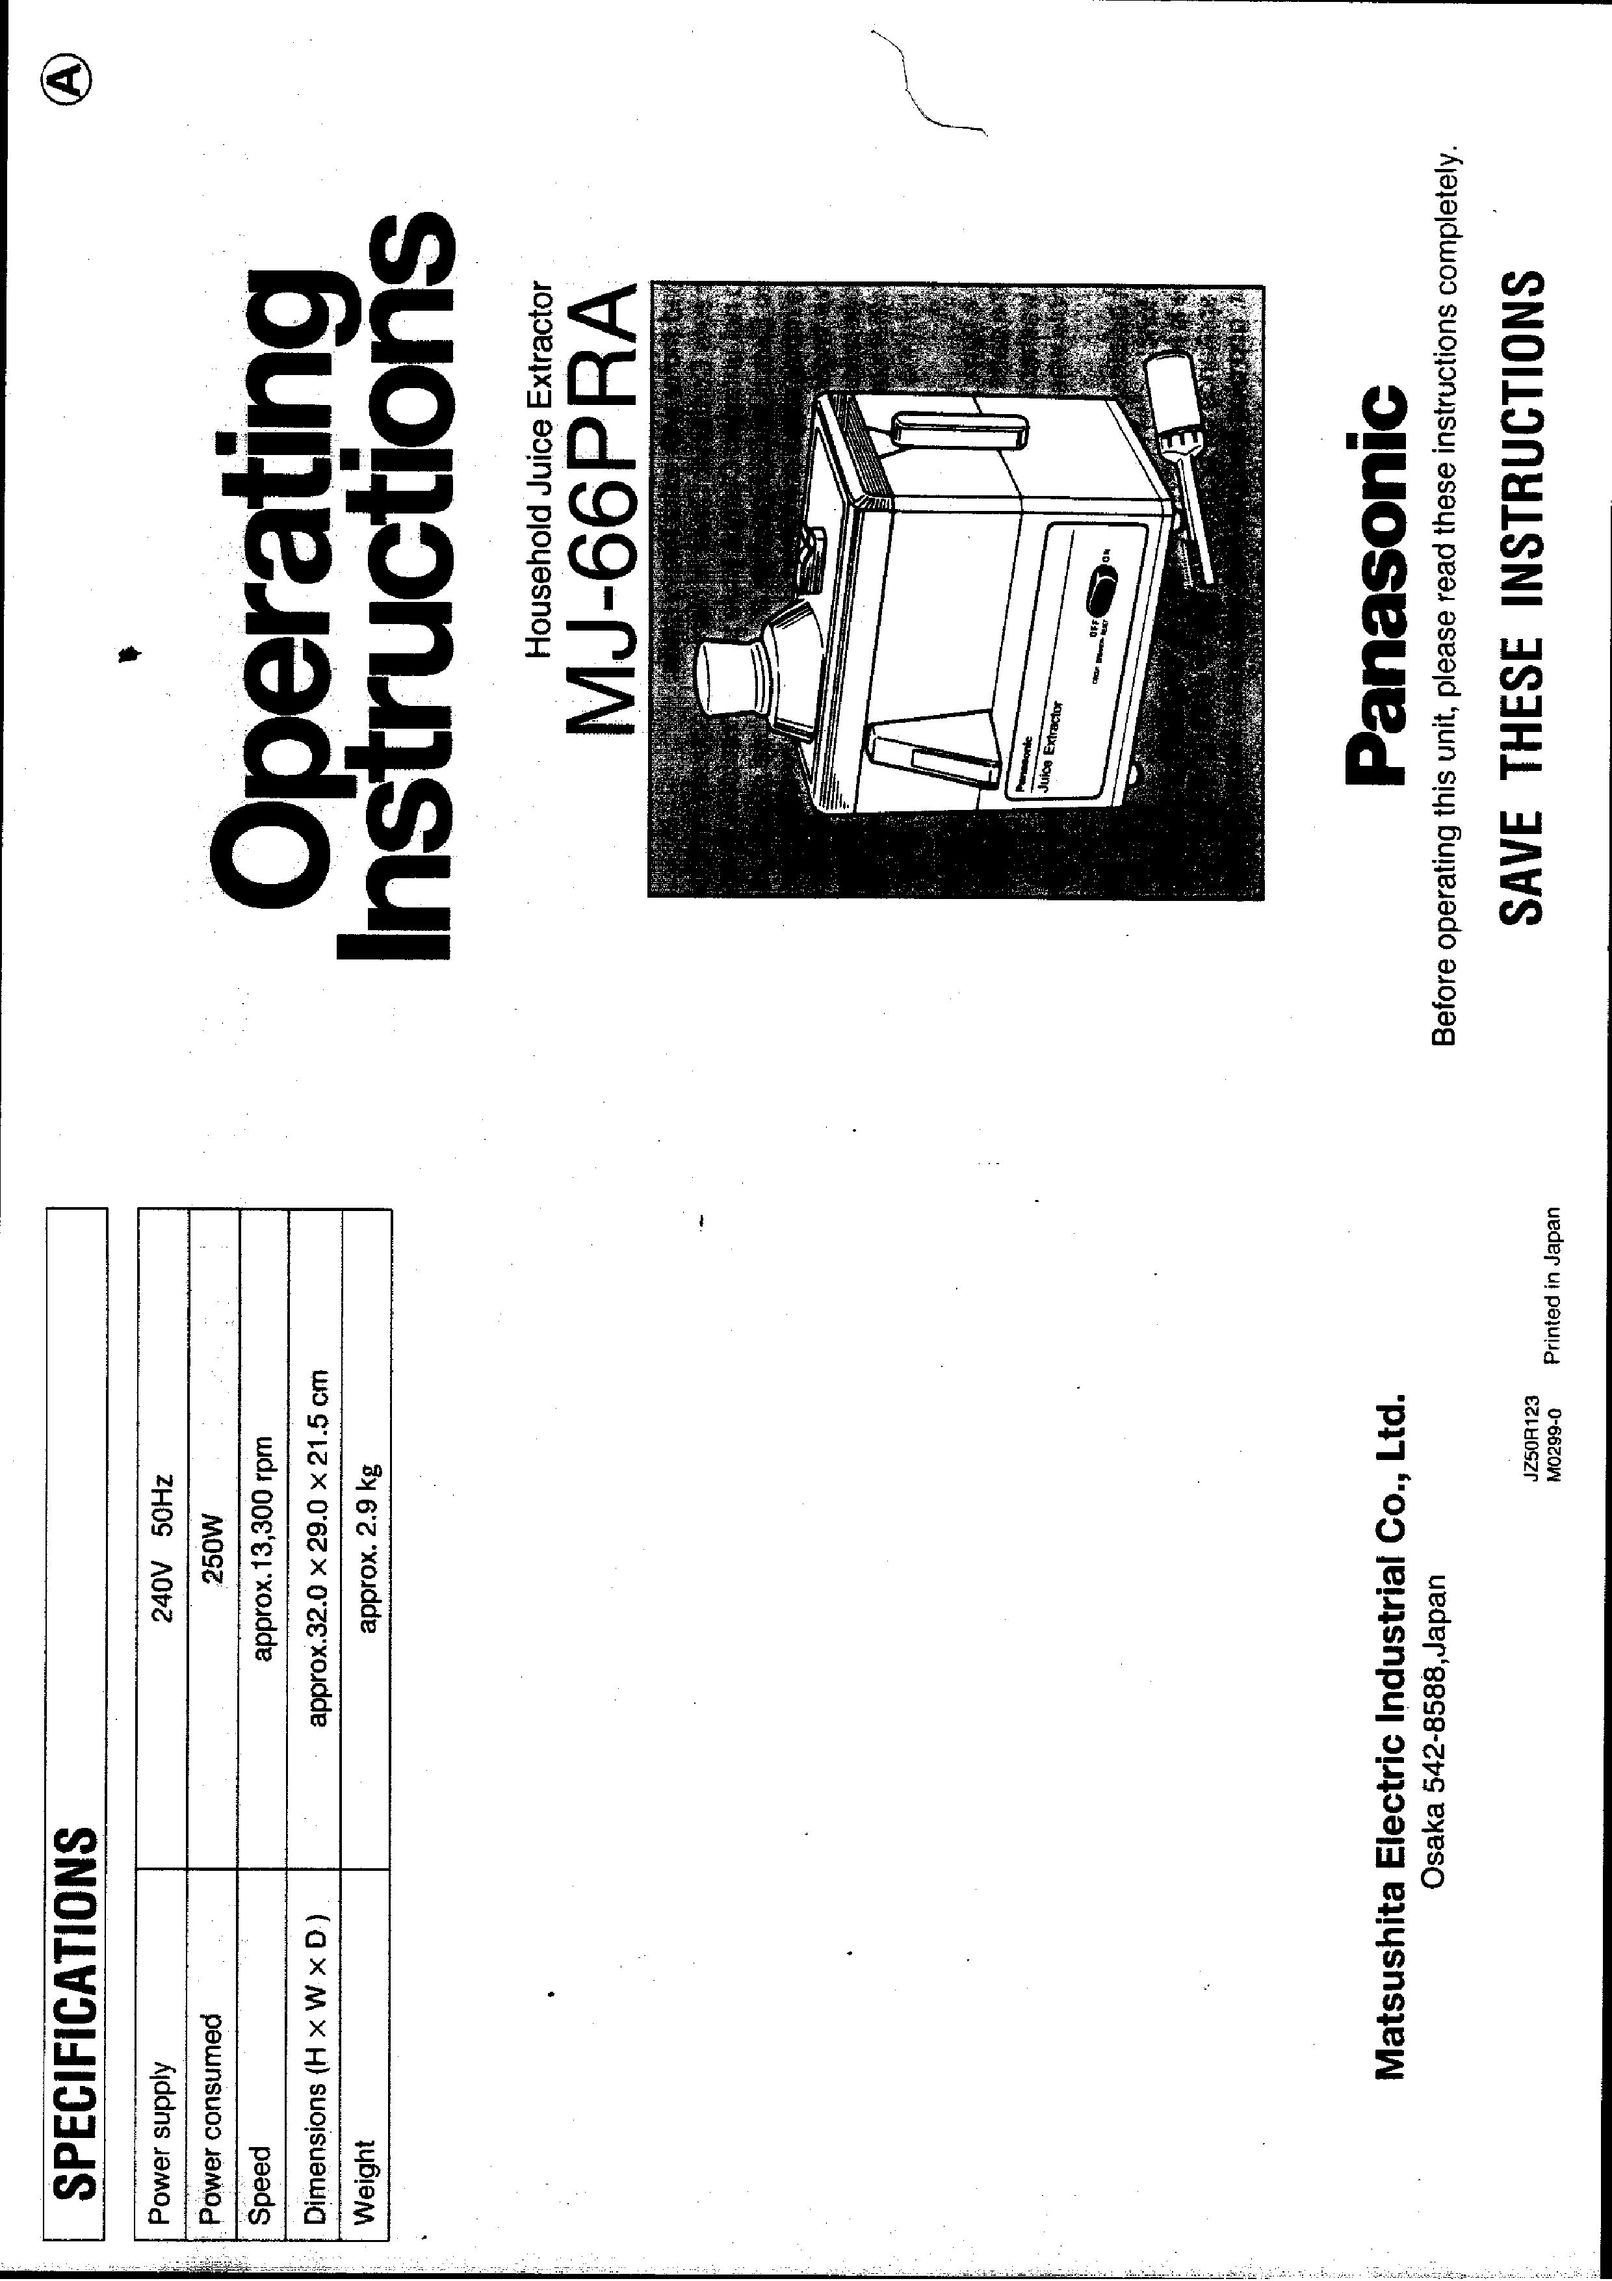 Panasonic MJ-66PRA Juicer User Manual